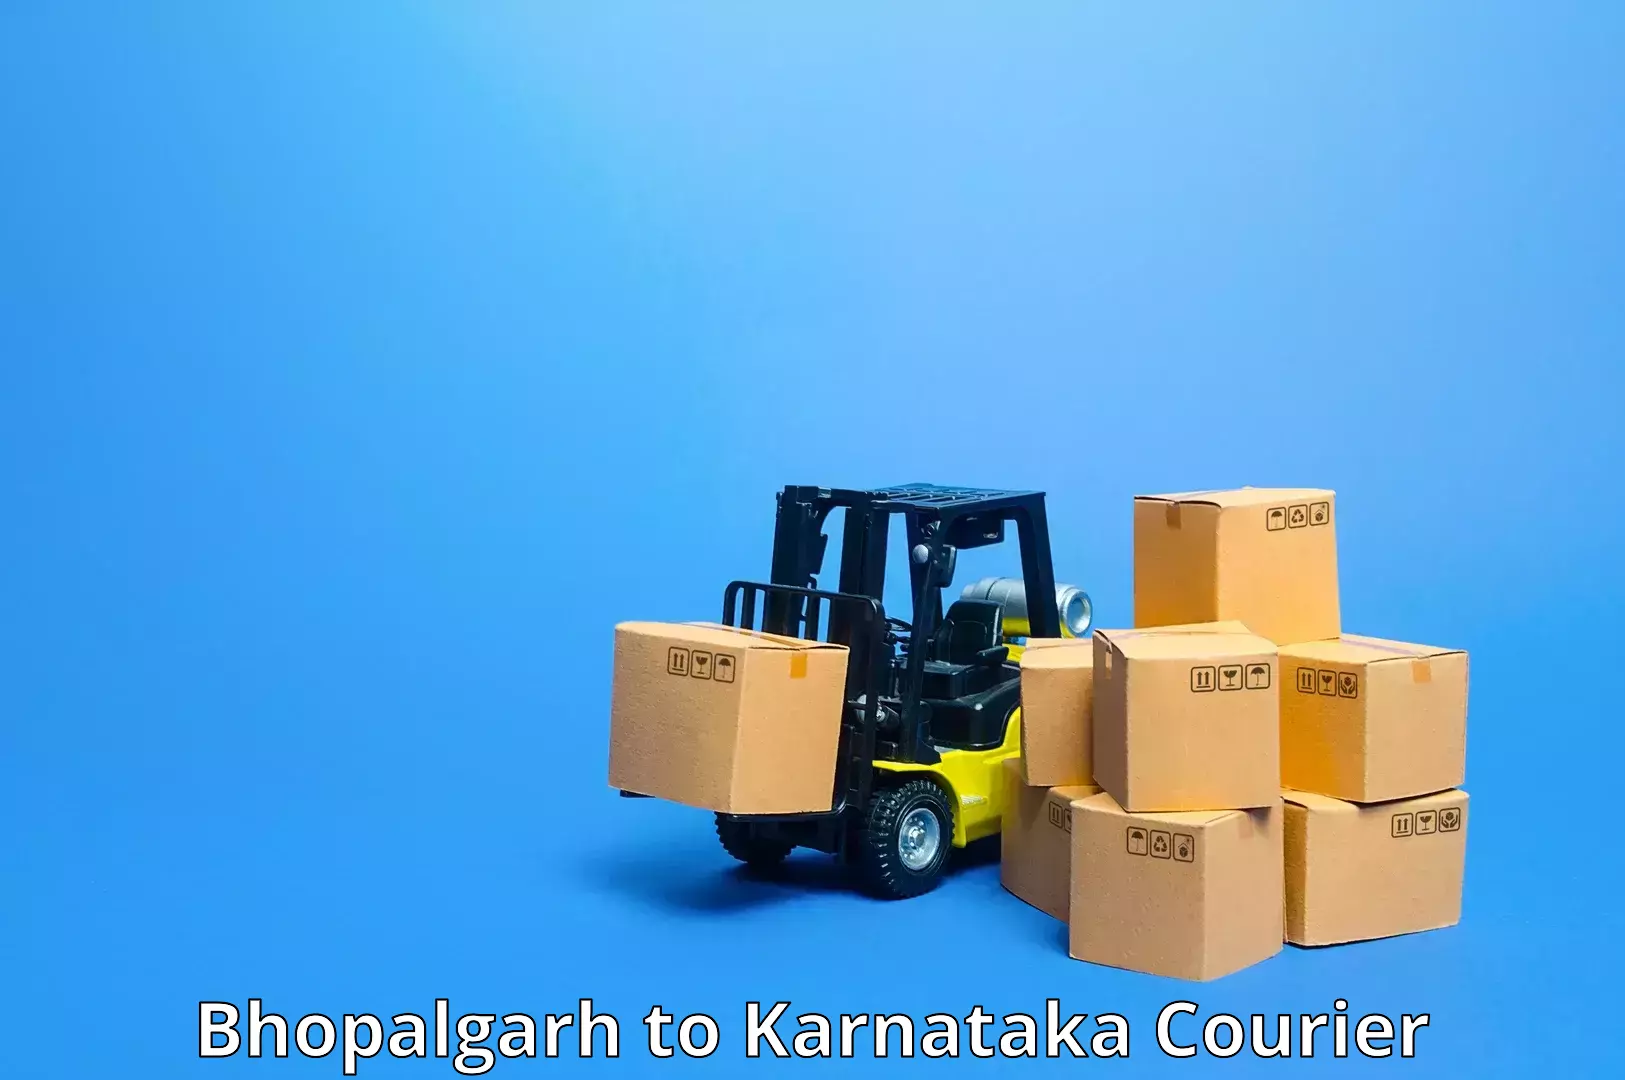 Advanced shipping technology Bhopalgarh to Channapatna